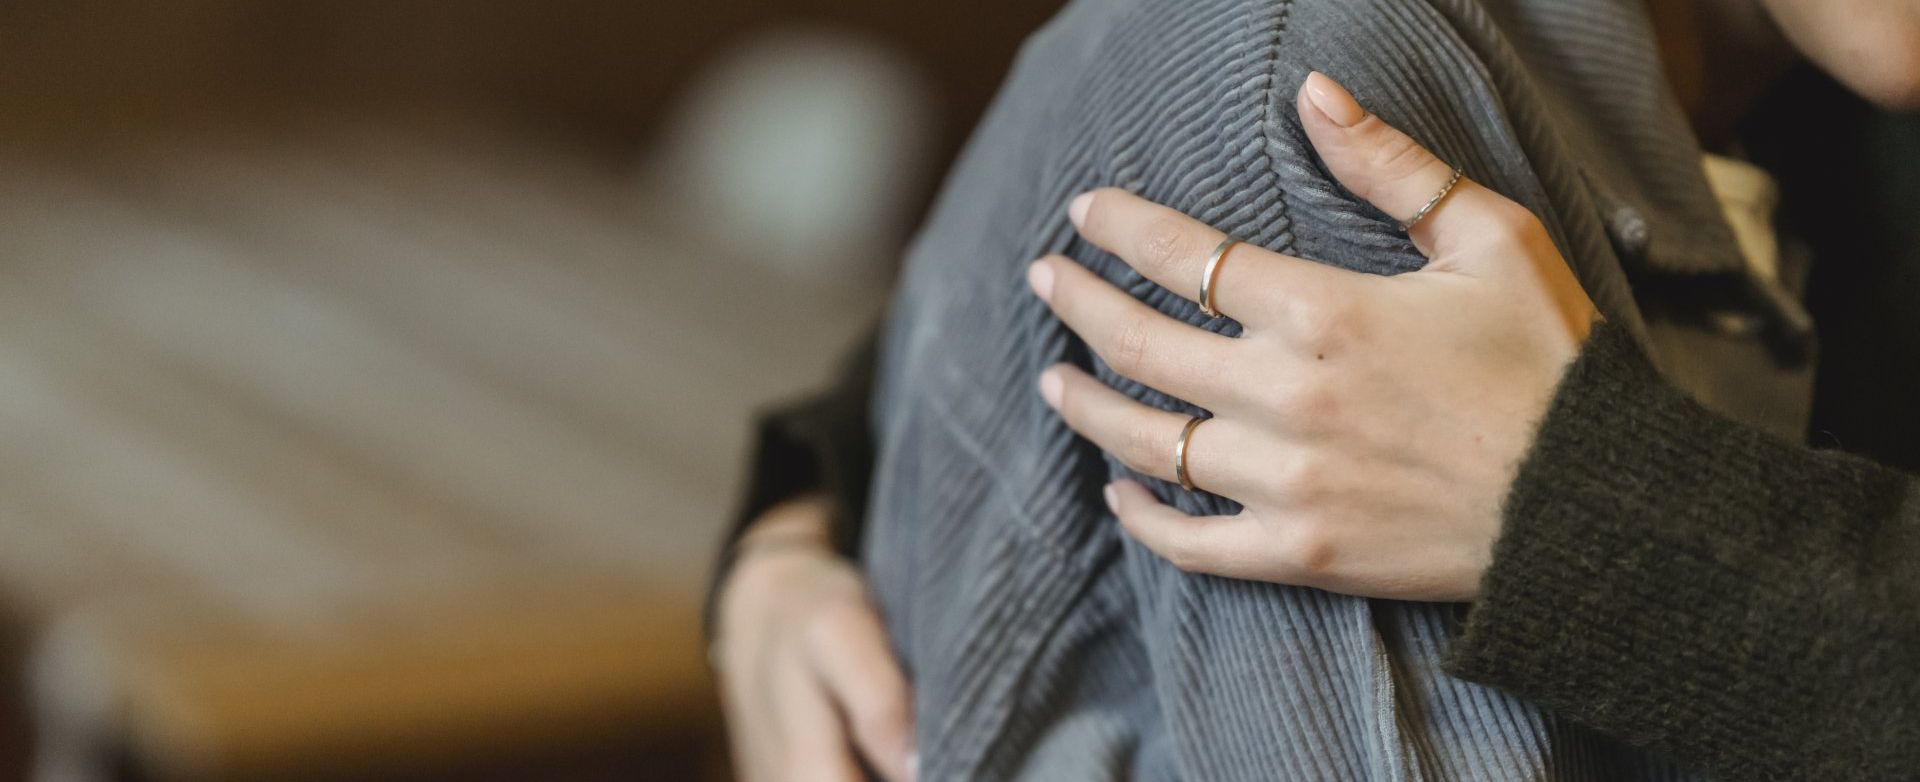 a woman wearing rings on her fingers hugging friend